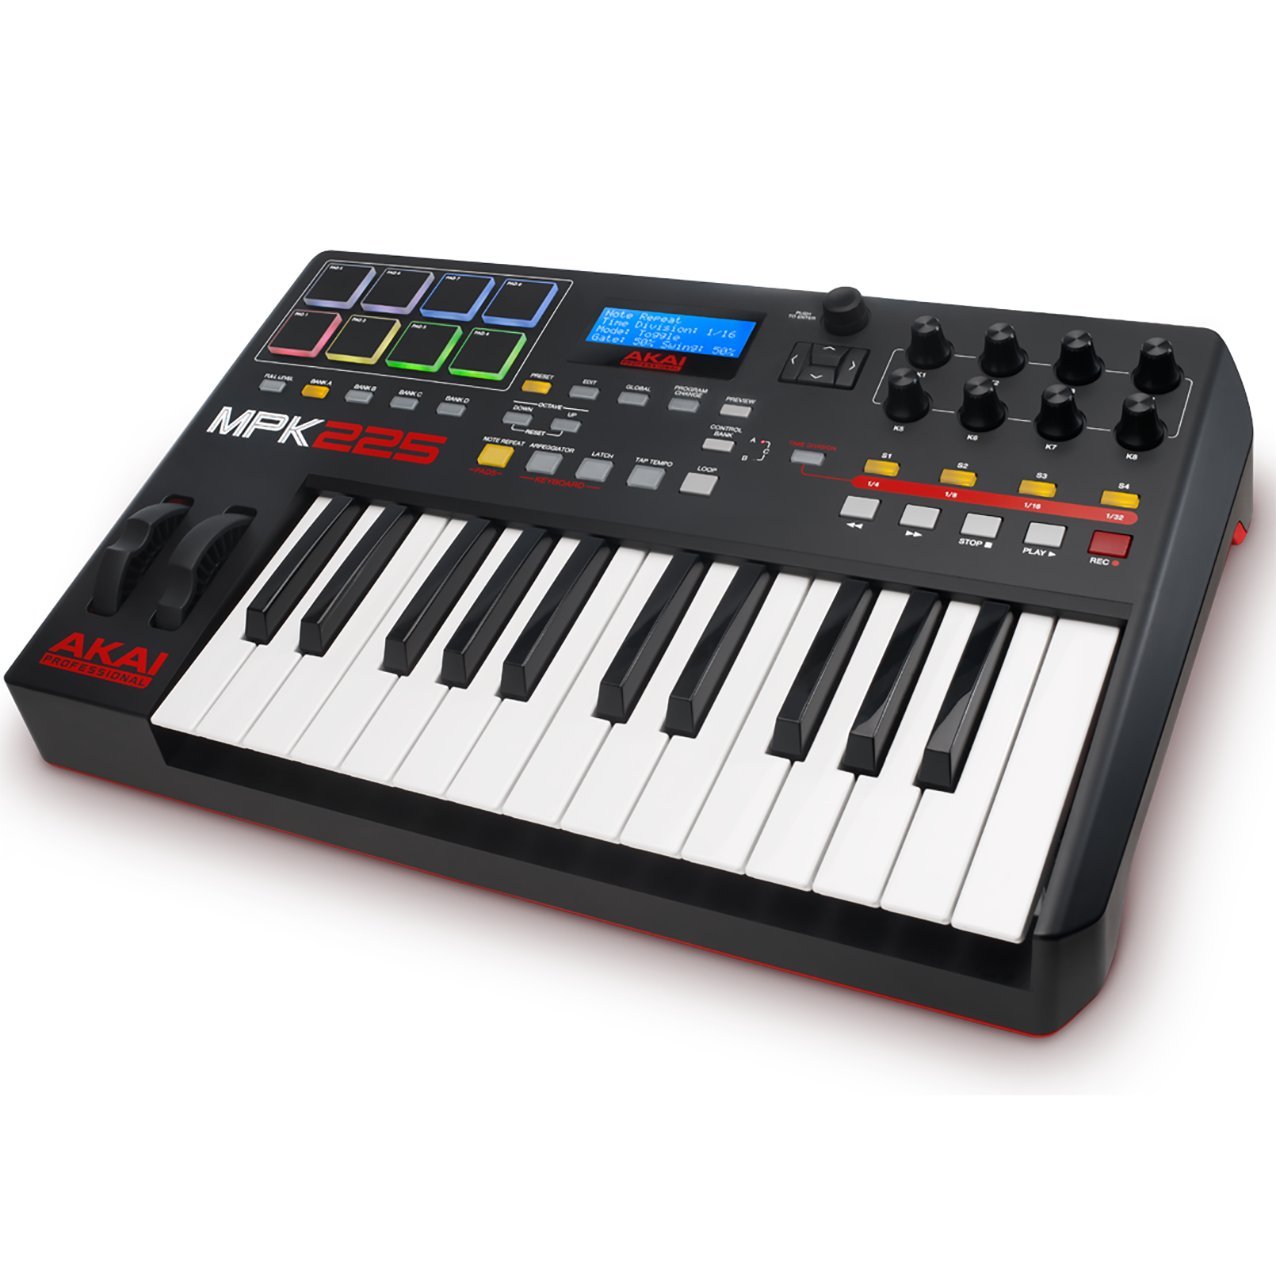 Akai Professional MPK225 – USB-MIDI-Keyboard-Controller mit 25 halbgewichteten Tasten